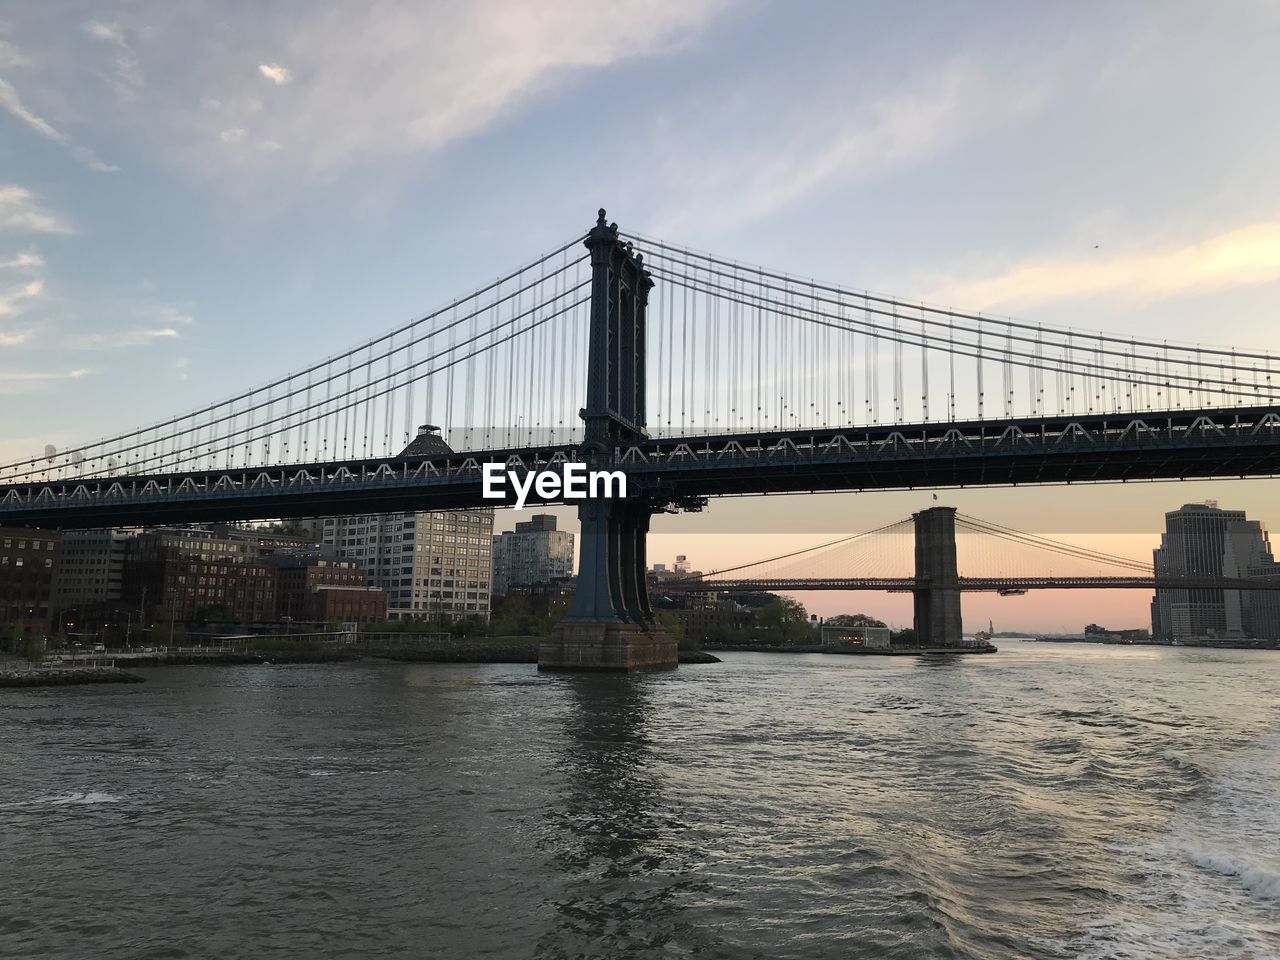 Manhattan bridge view from water